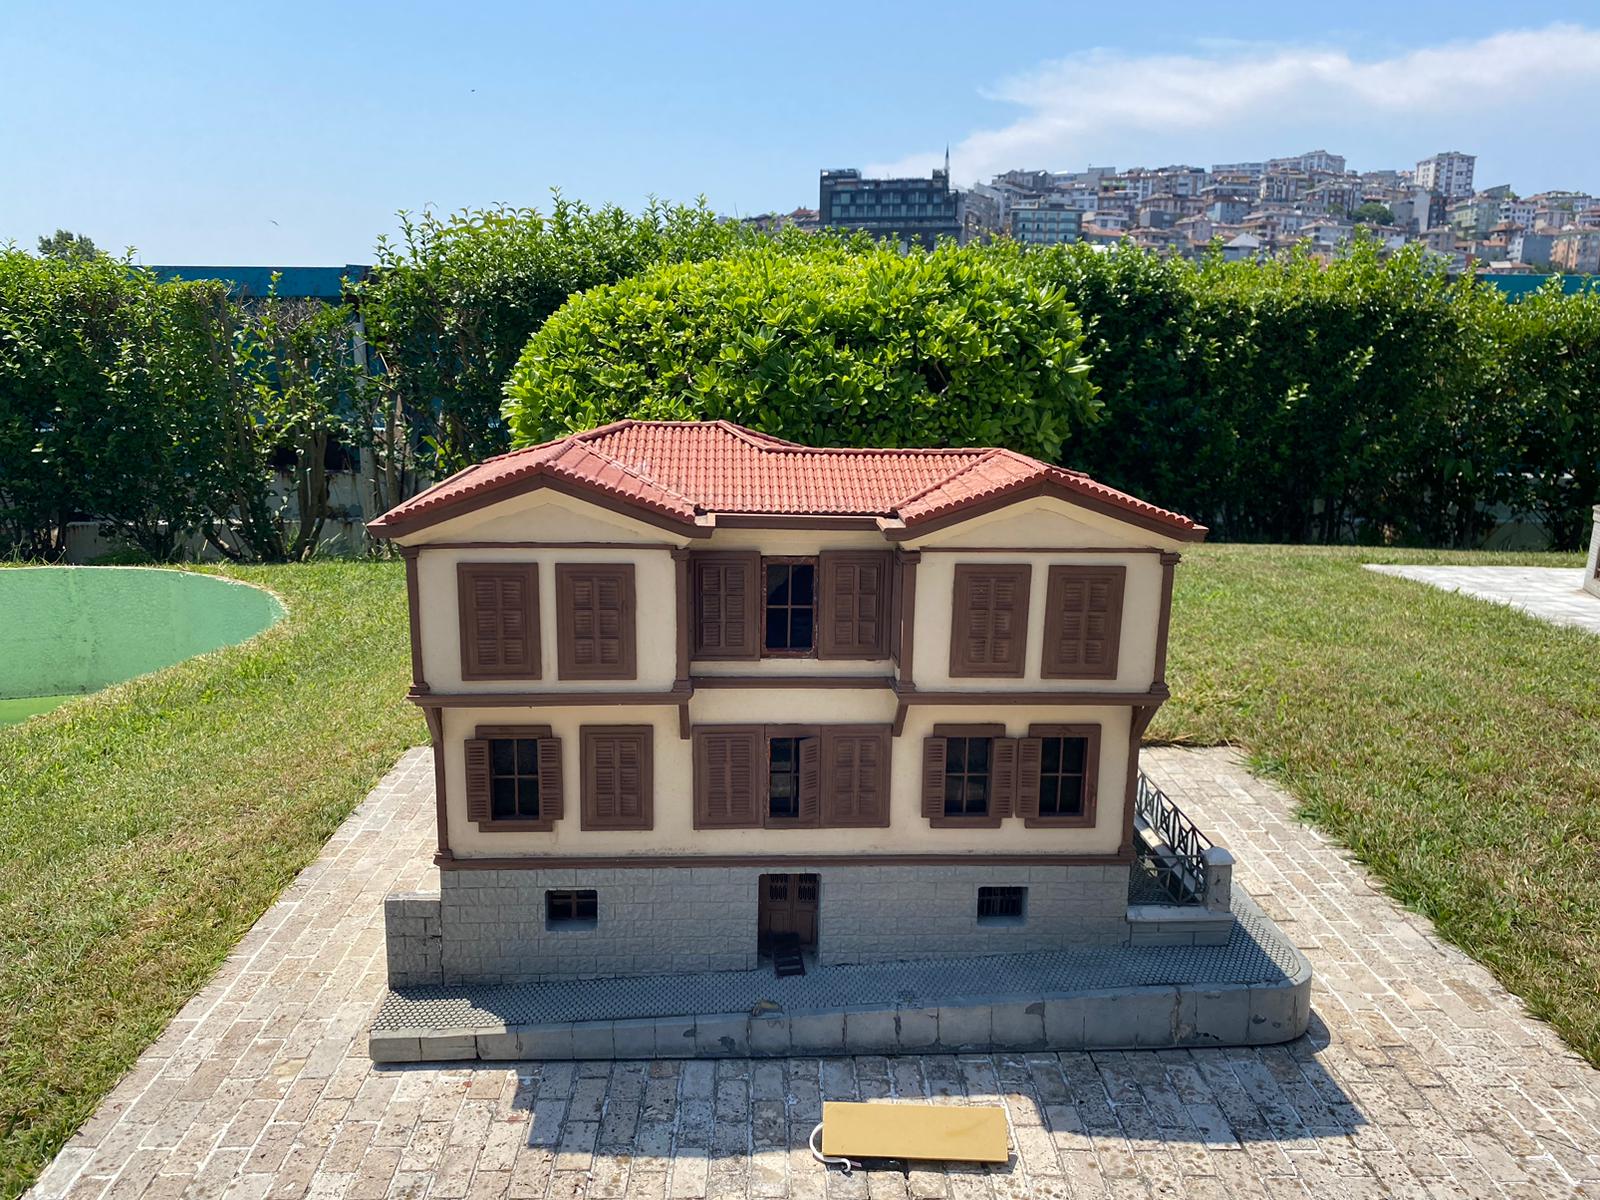 Ataturk's House.jpeg